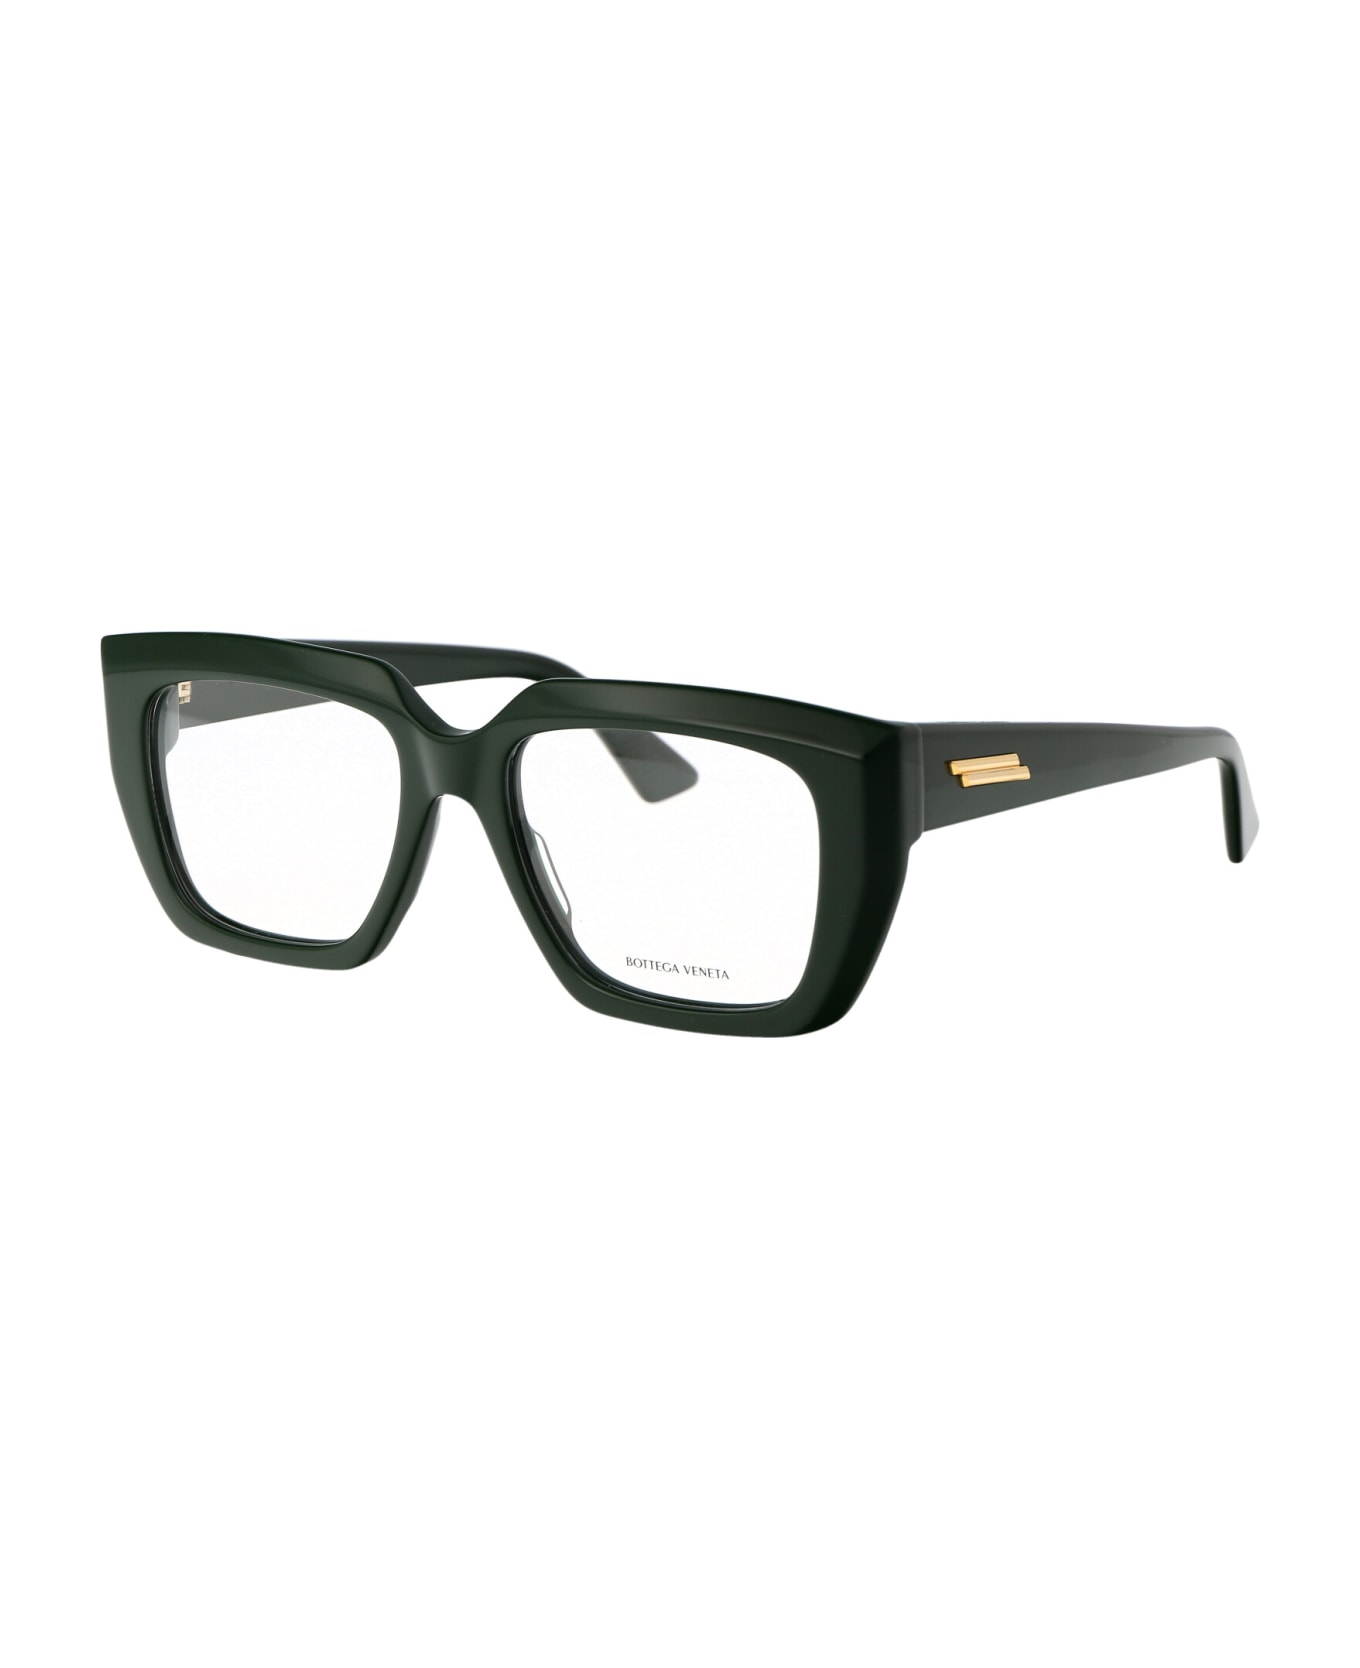 Bottega Veneta Eyewear Bv1032o Glasses - 006 GREEN GREEN TRANSPARENT